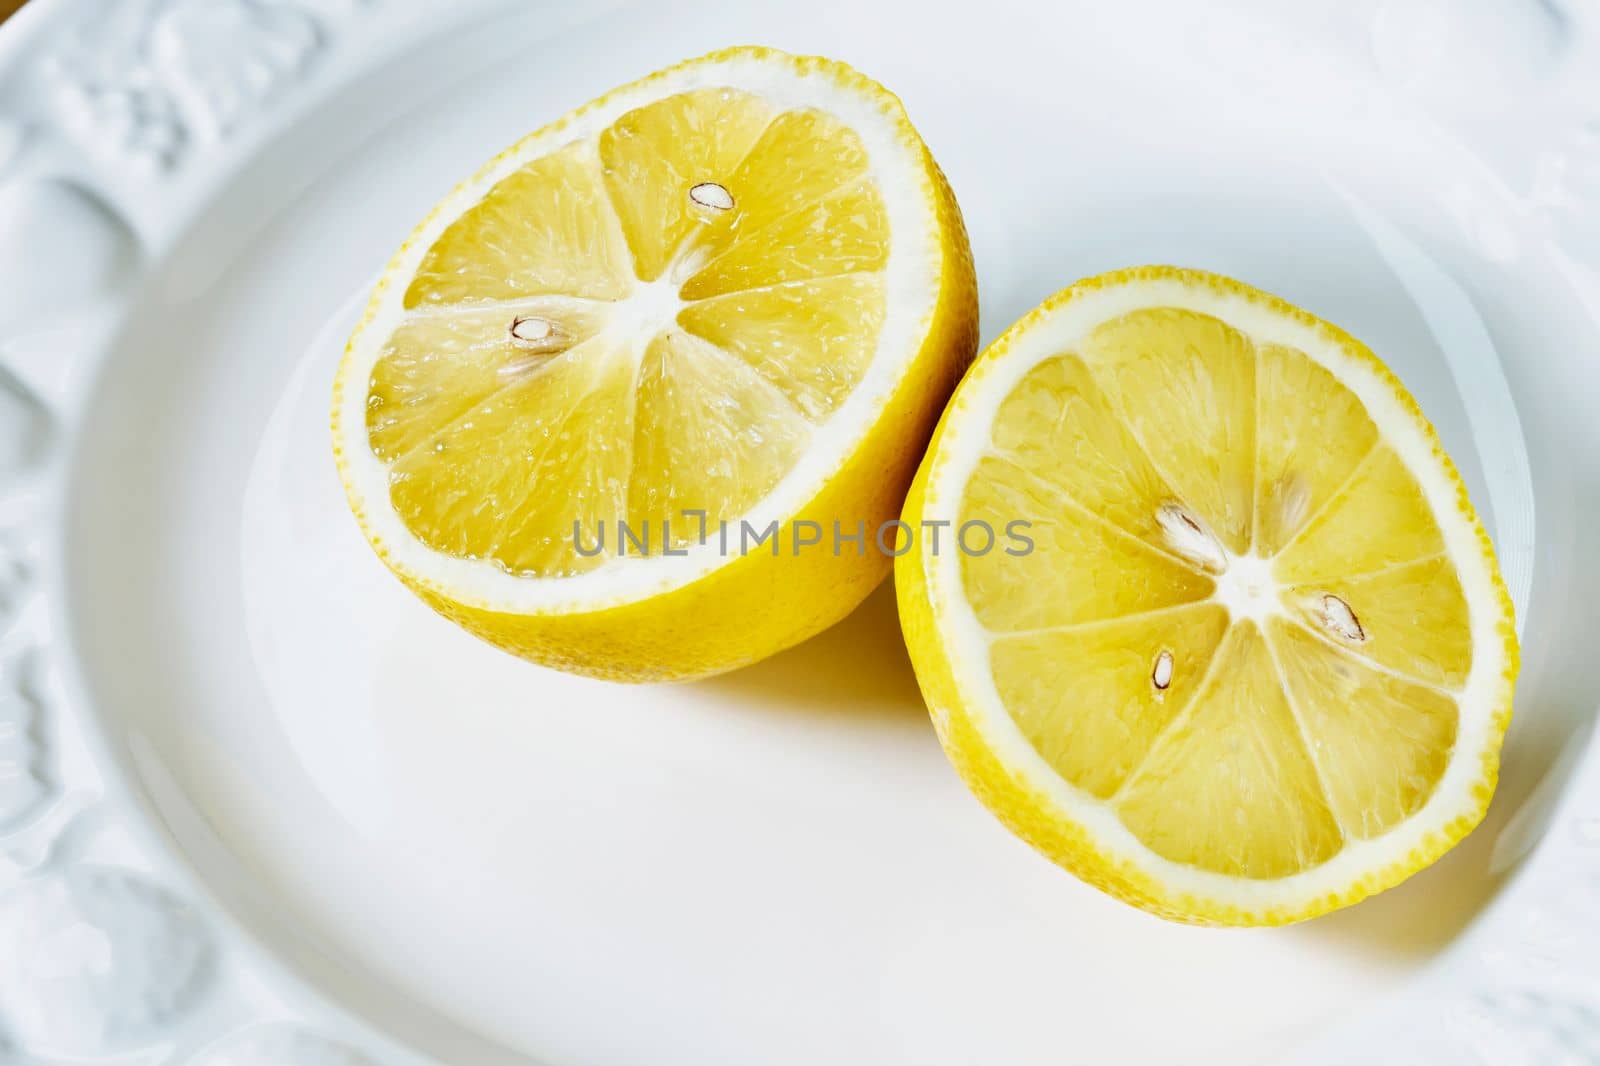 Lemon cut in half on plate by victimewalker